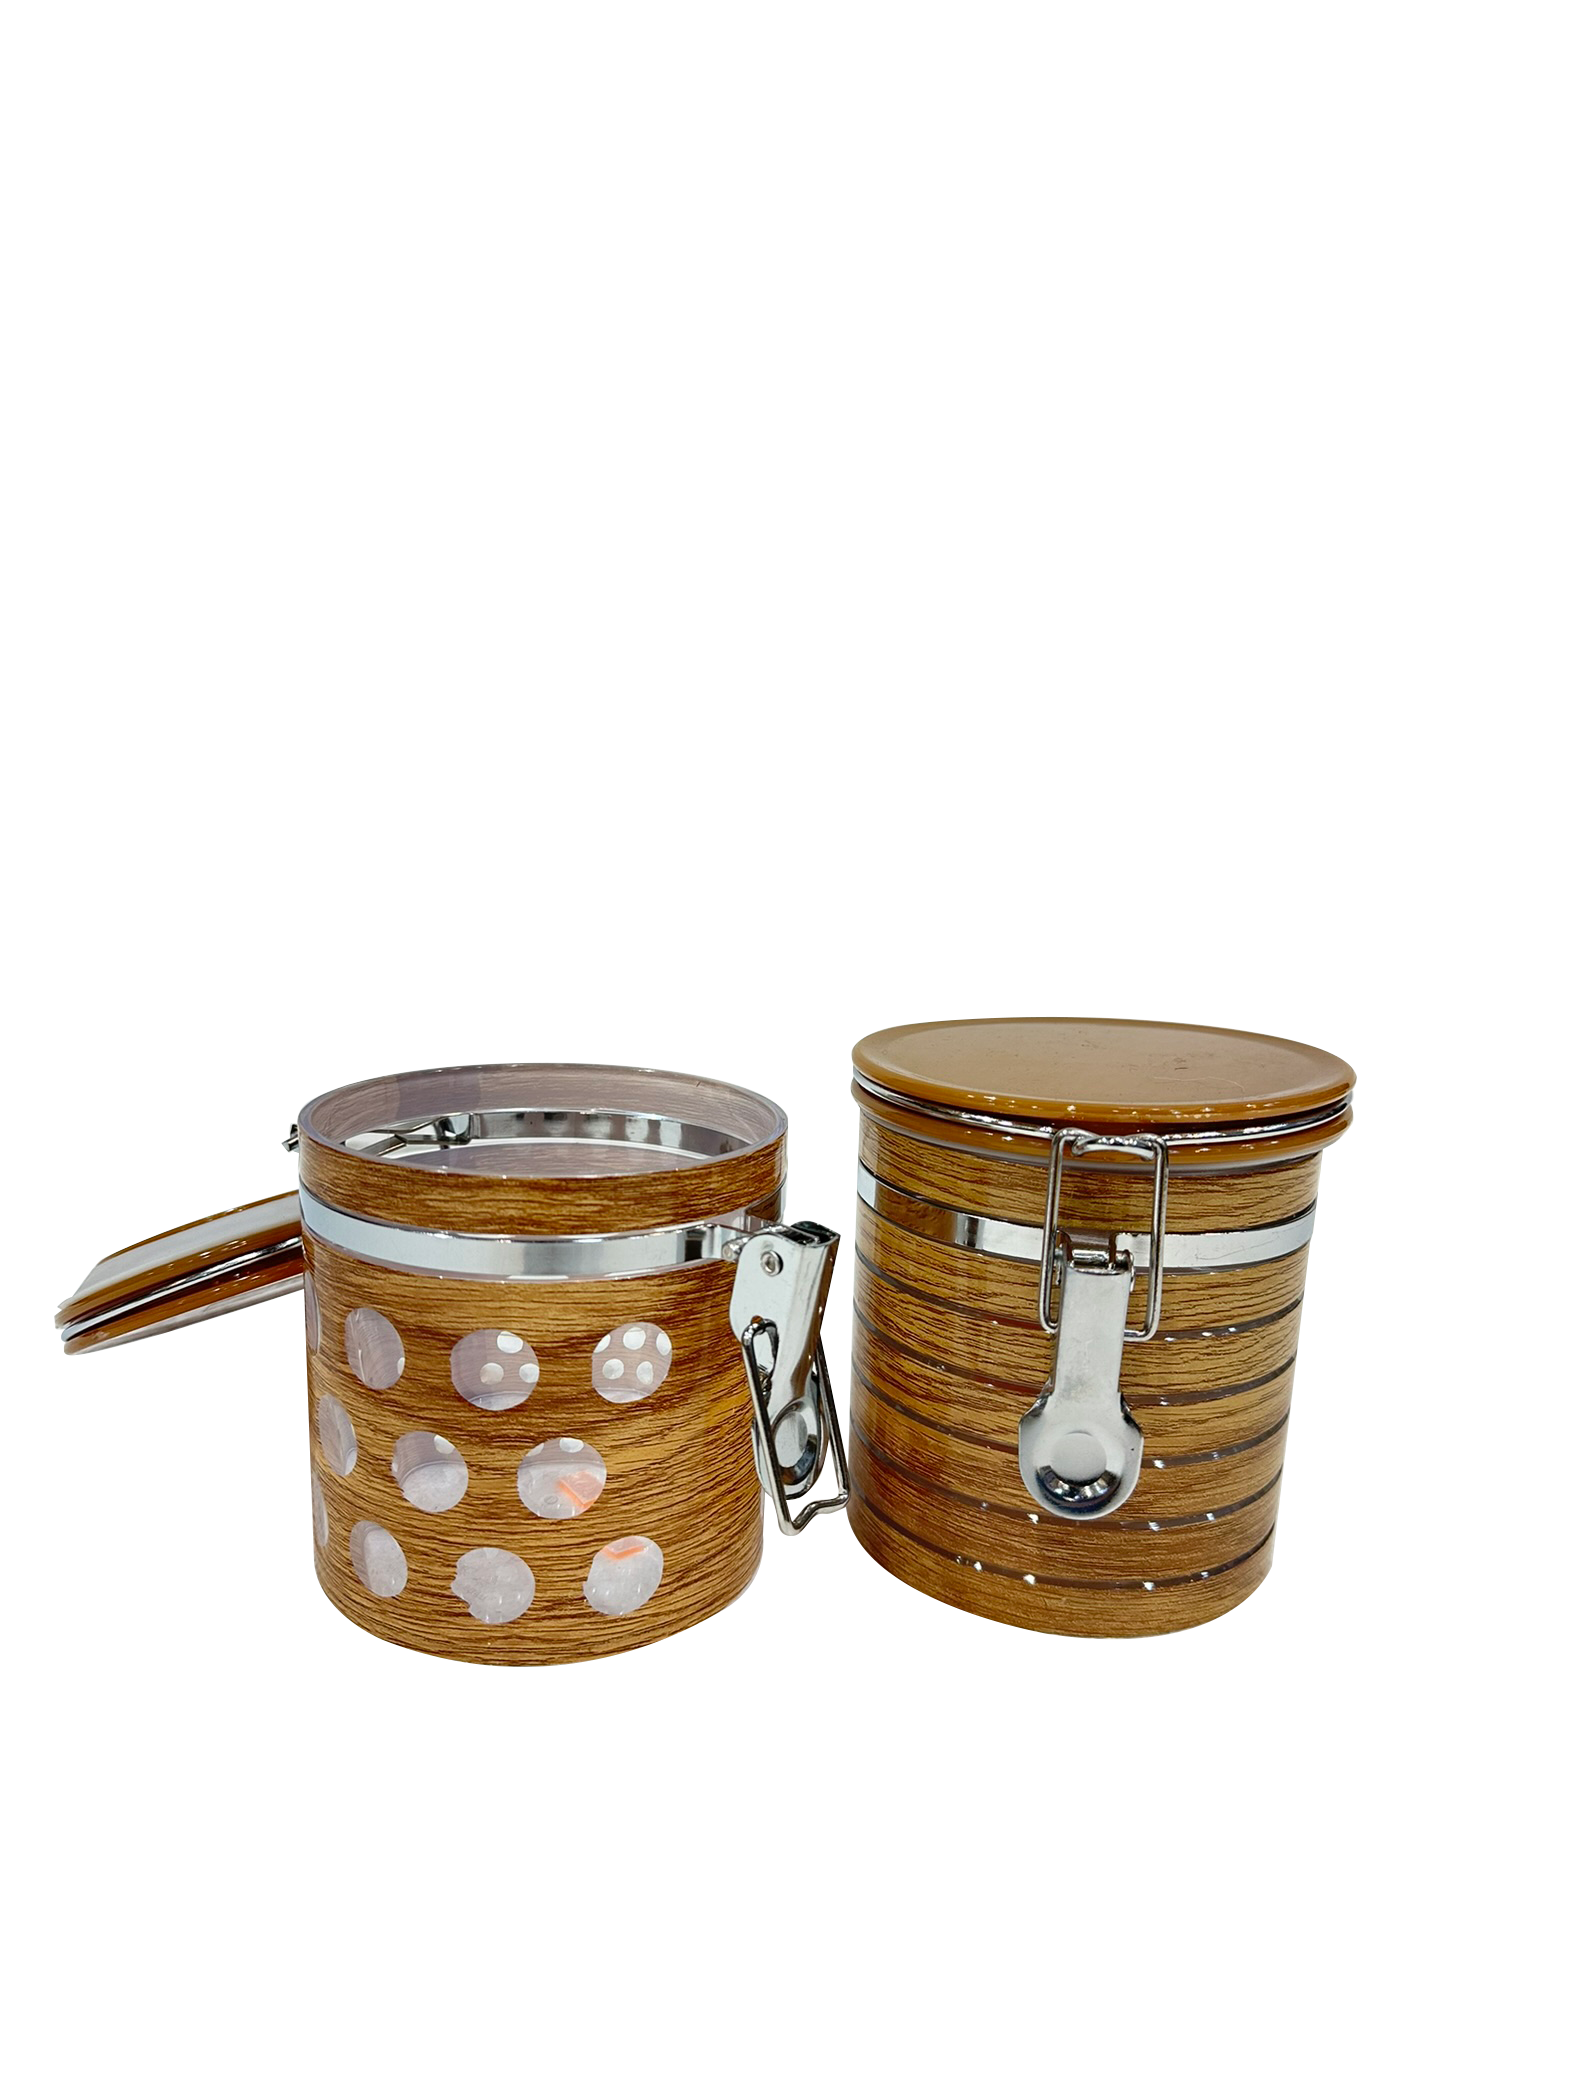 White Polka Dots Glass Jar (Set of 2) - Sunset Gifts Store